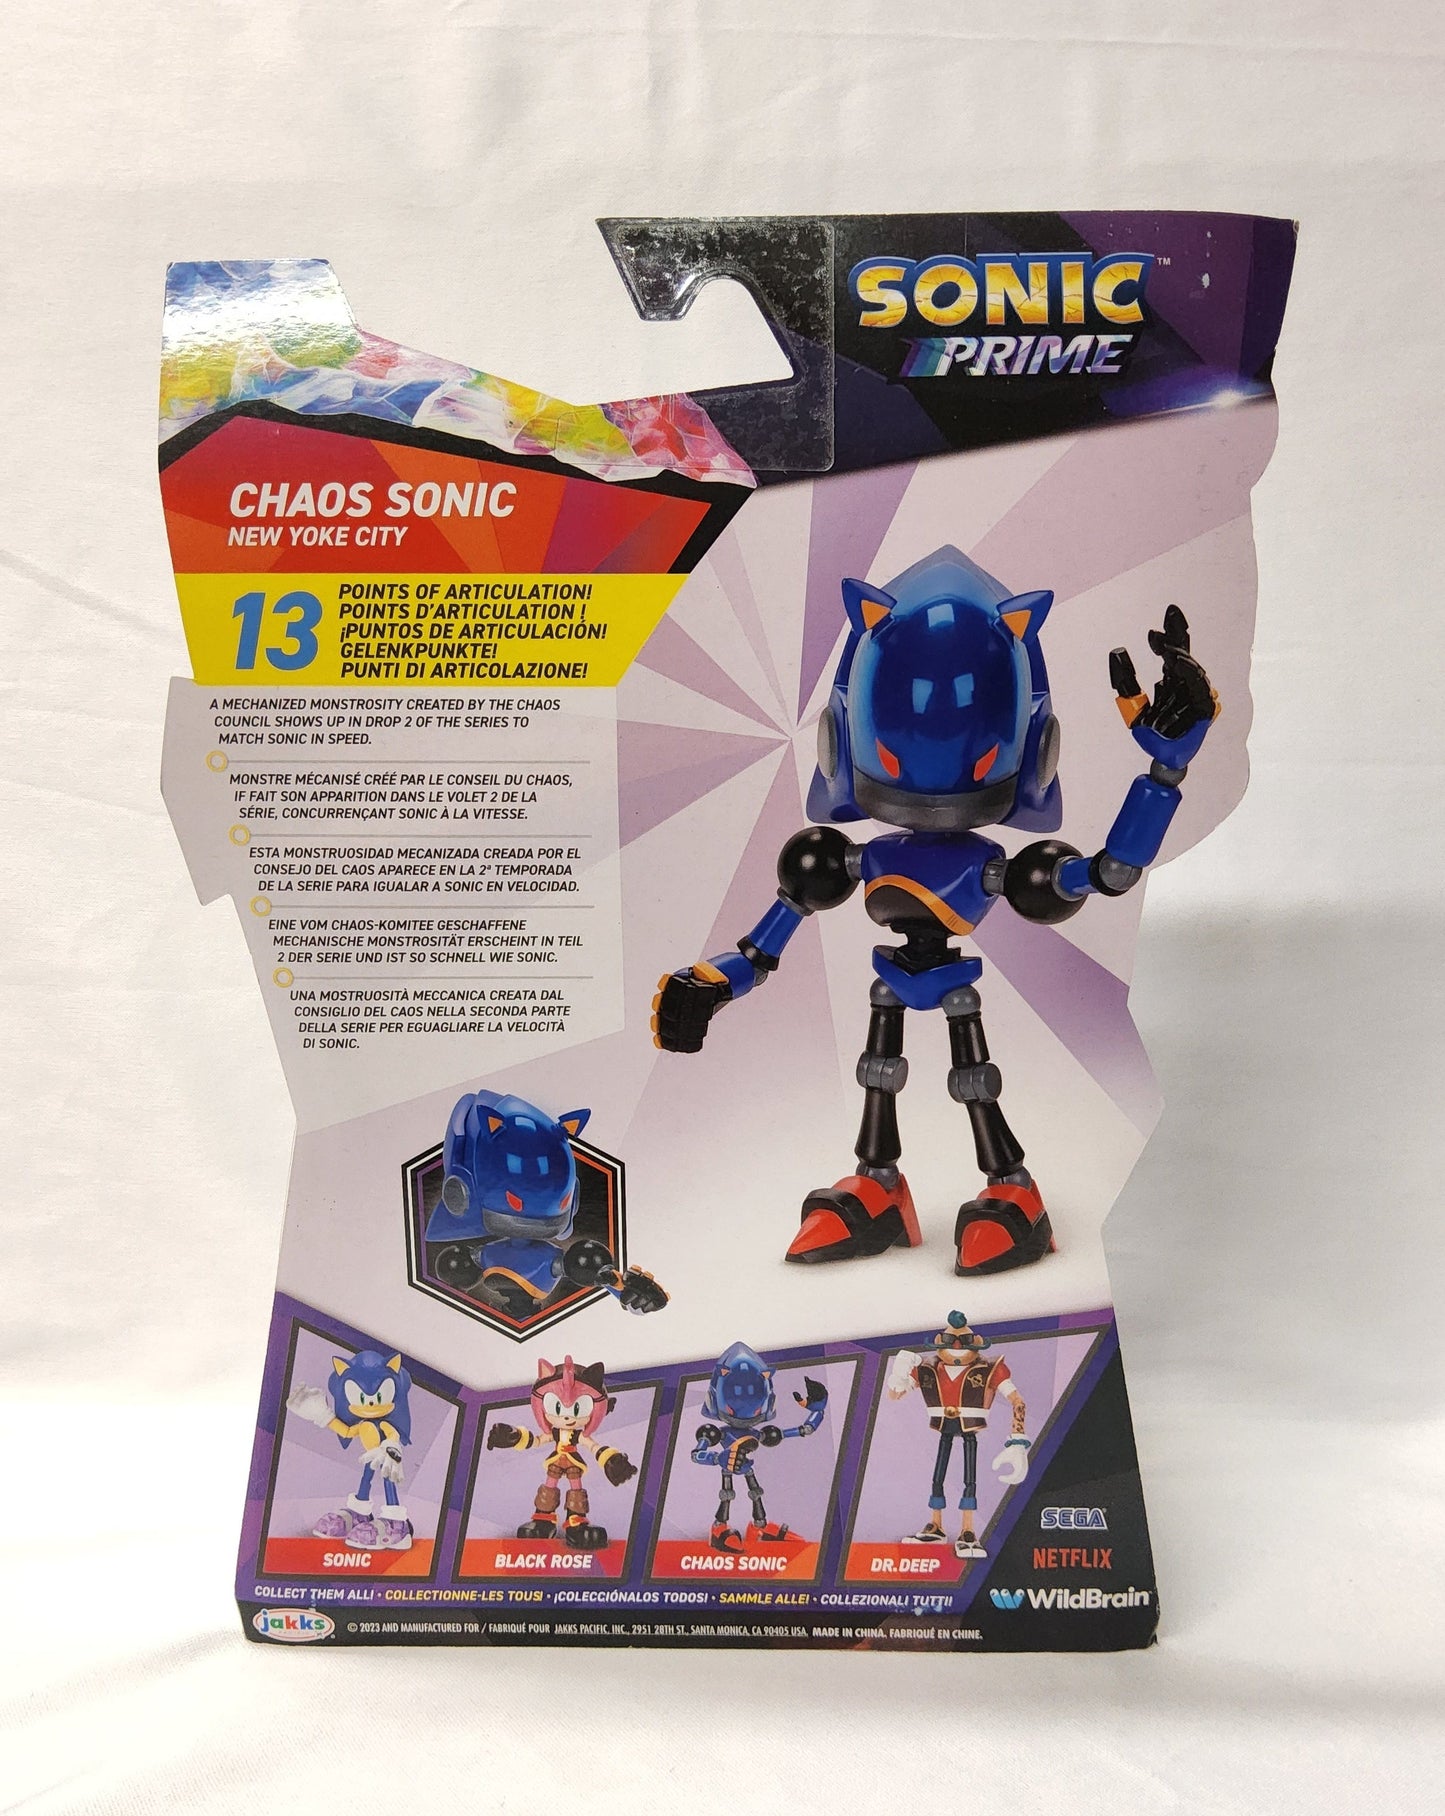 Jakks Pacific Sonic Prime Chaos Sonic New Yoke 5" Netflix Action Figure